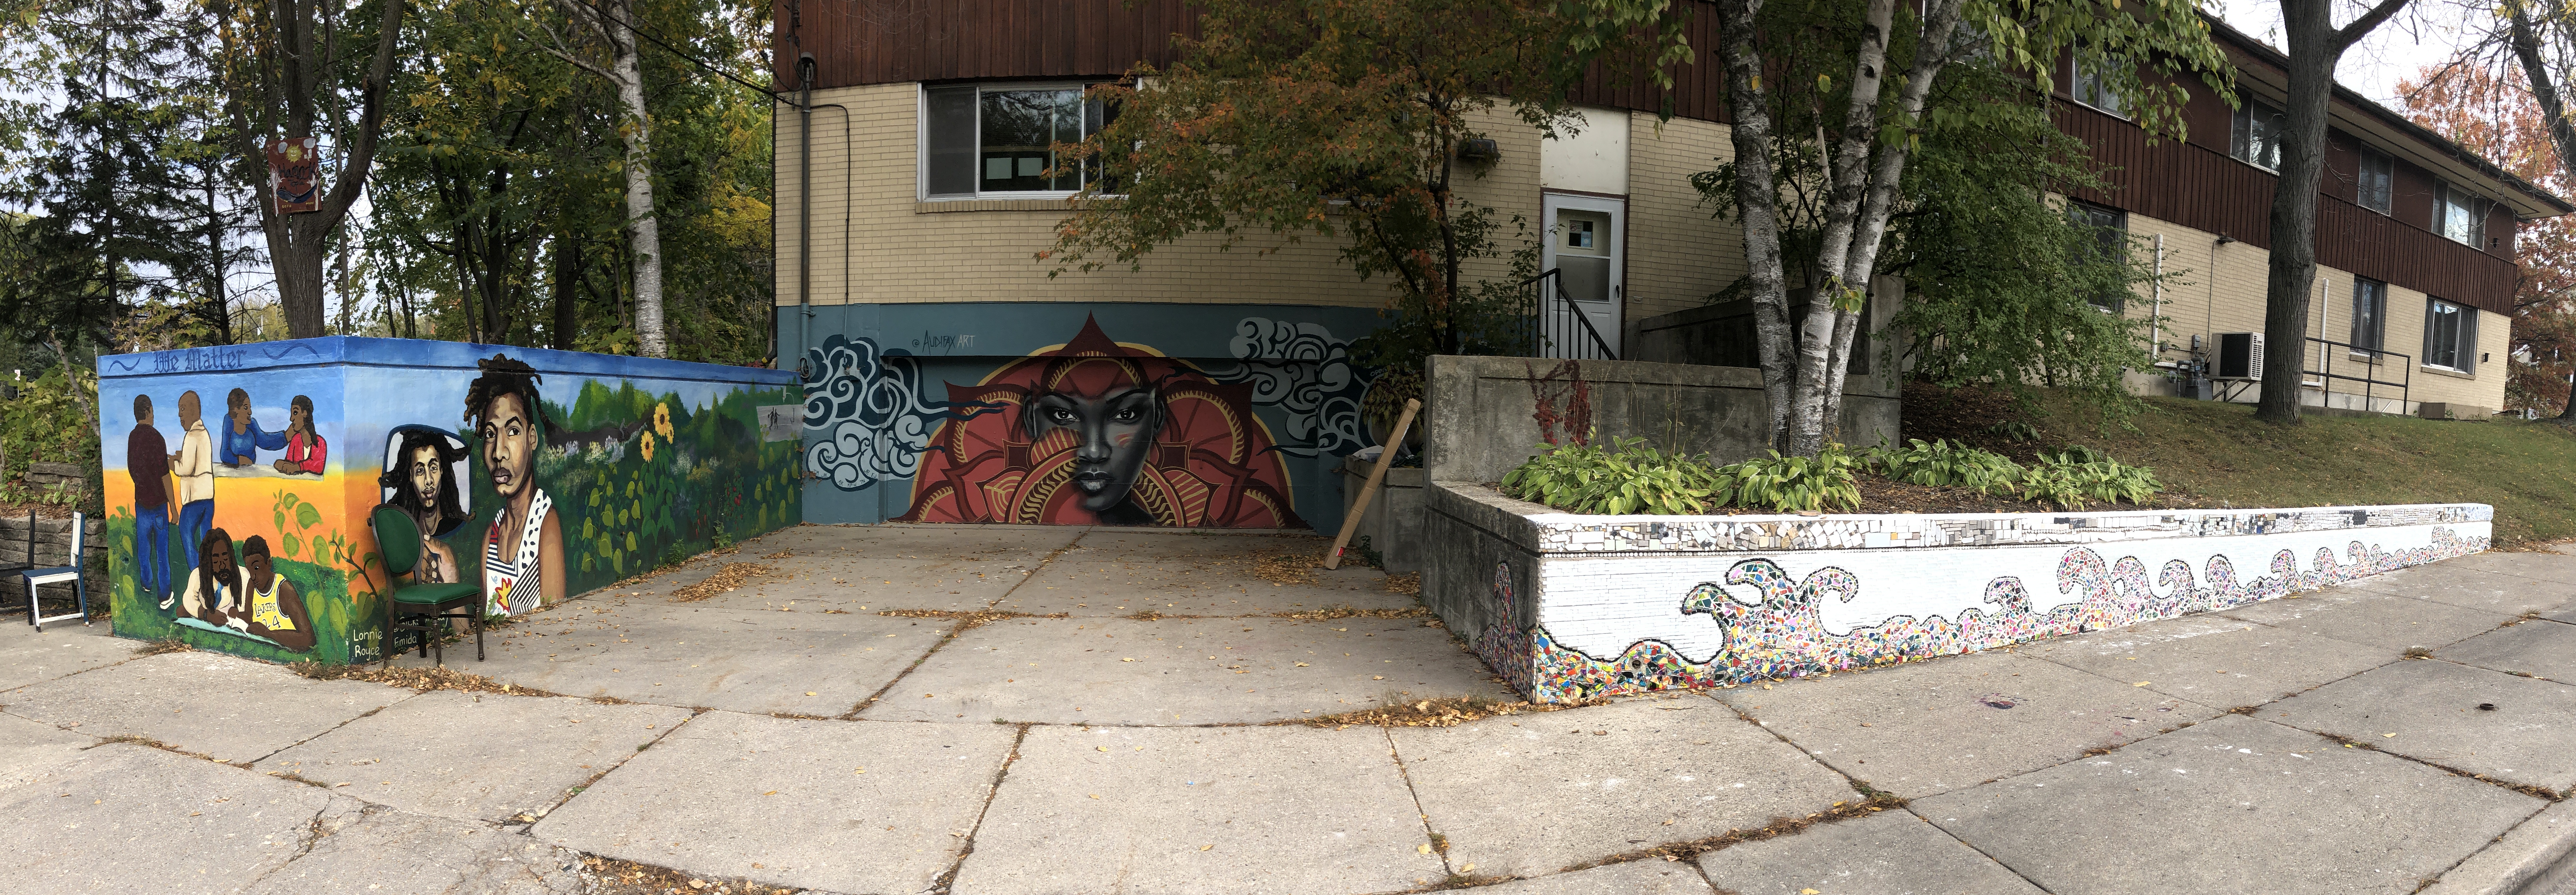 Dane County Juvenile Court Shelter Home driveway murals by Bubbler artists